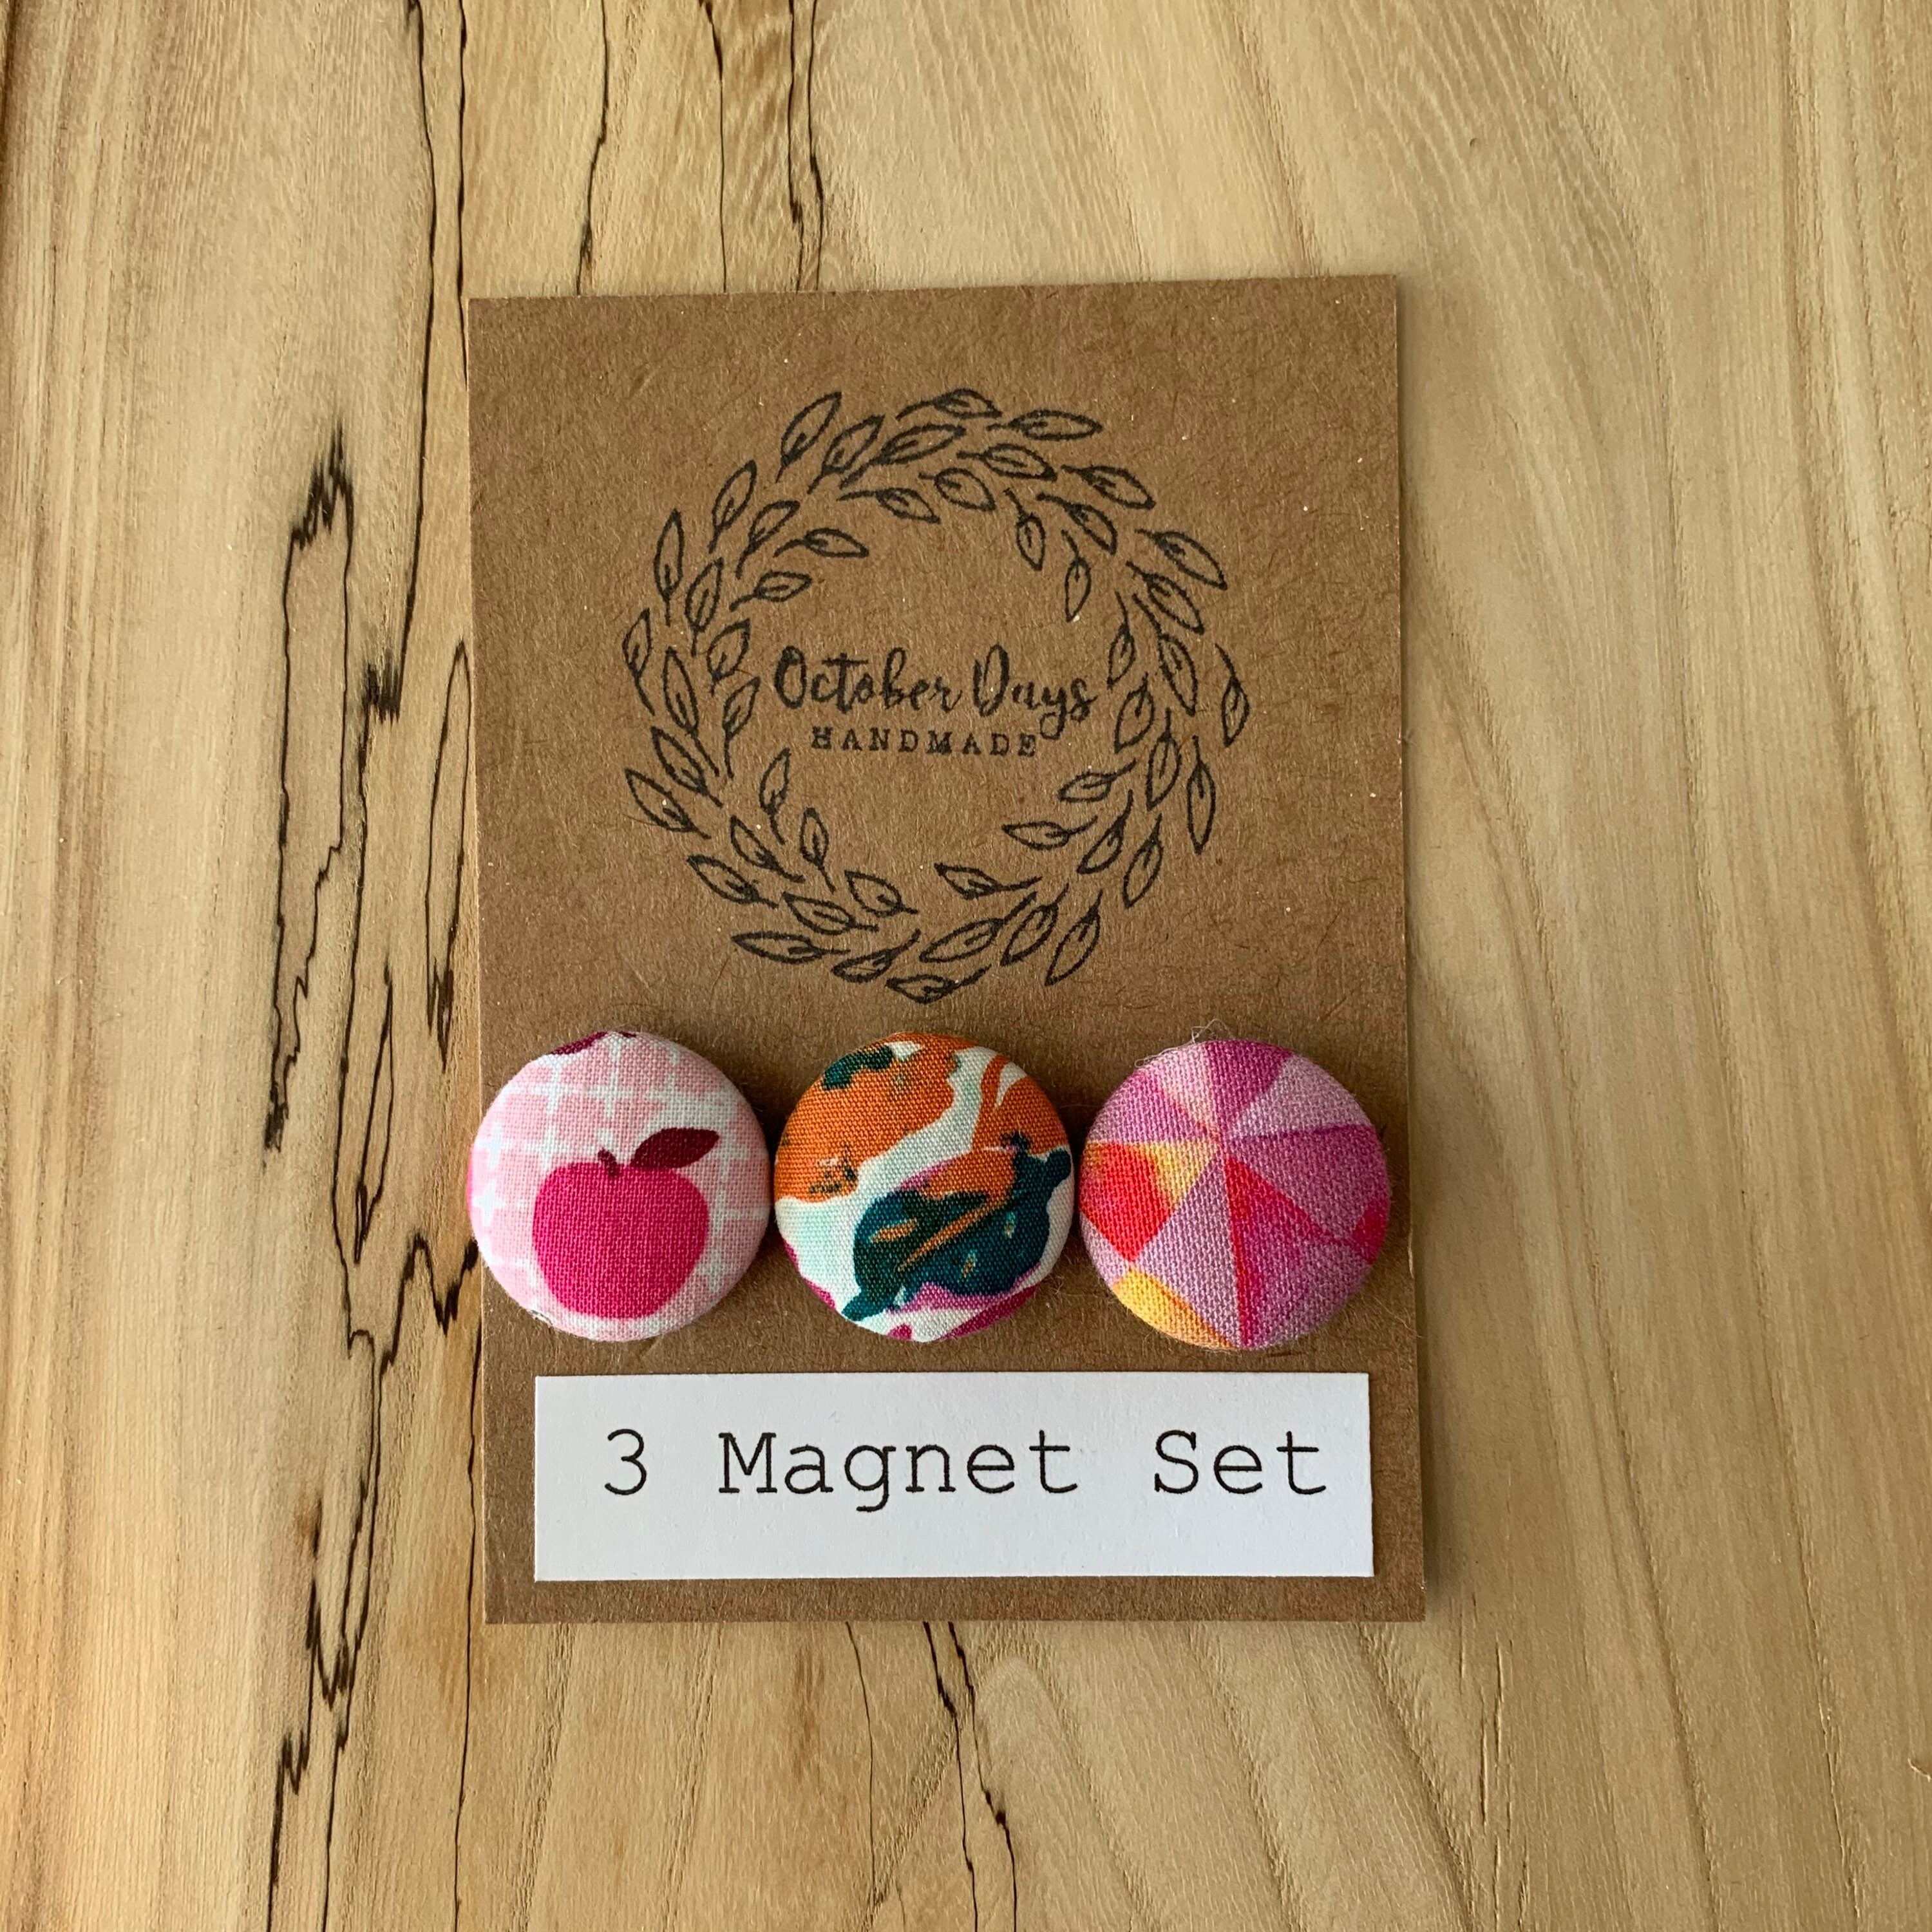 office organizer Pink Apple Orange Flowers Medallion Fridge Magnet set Set of 3 Round Magnets 0.75 Inch Refrigerator Magnet